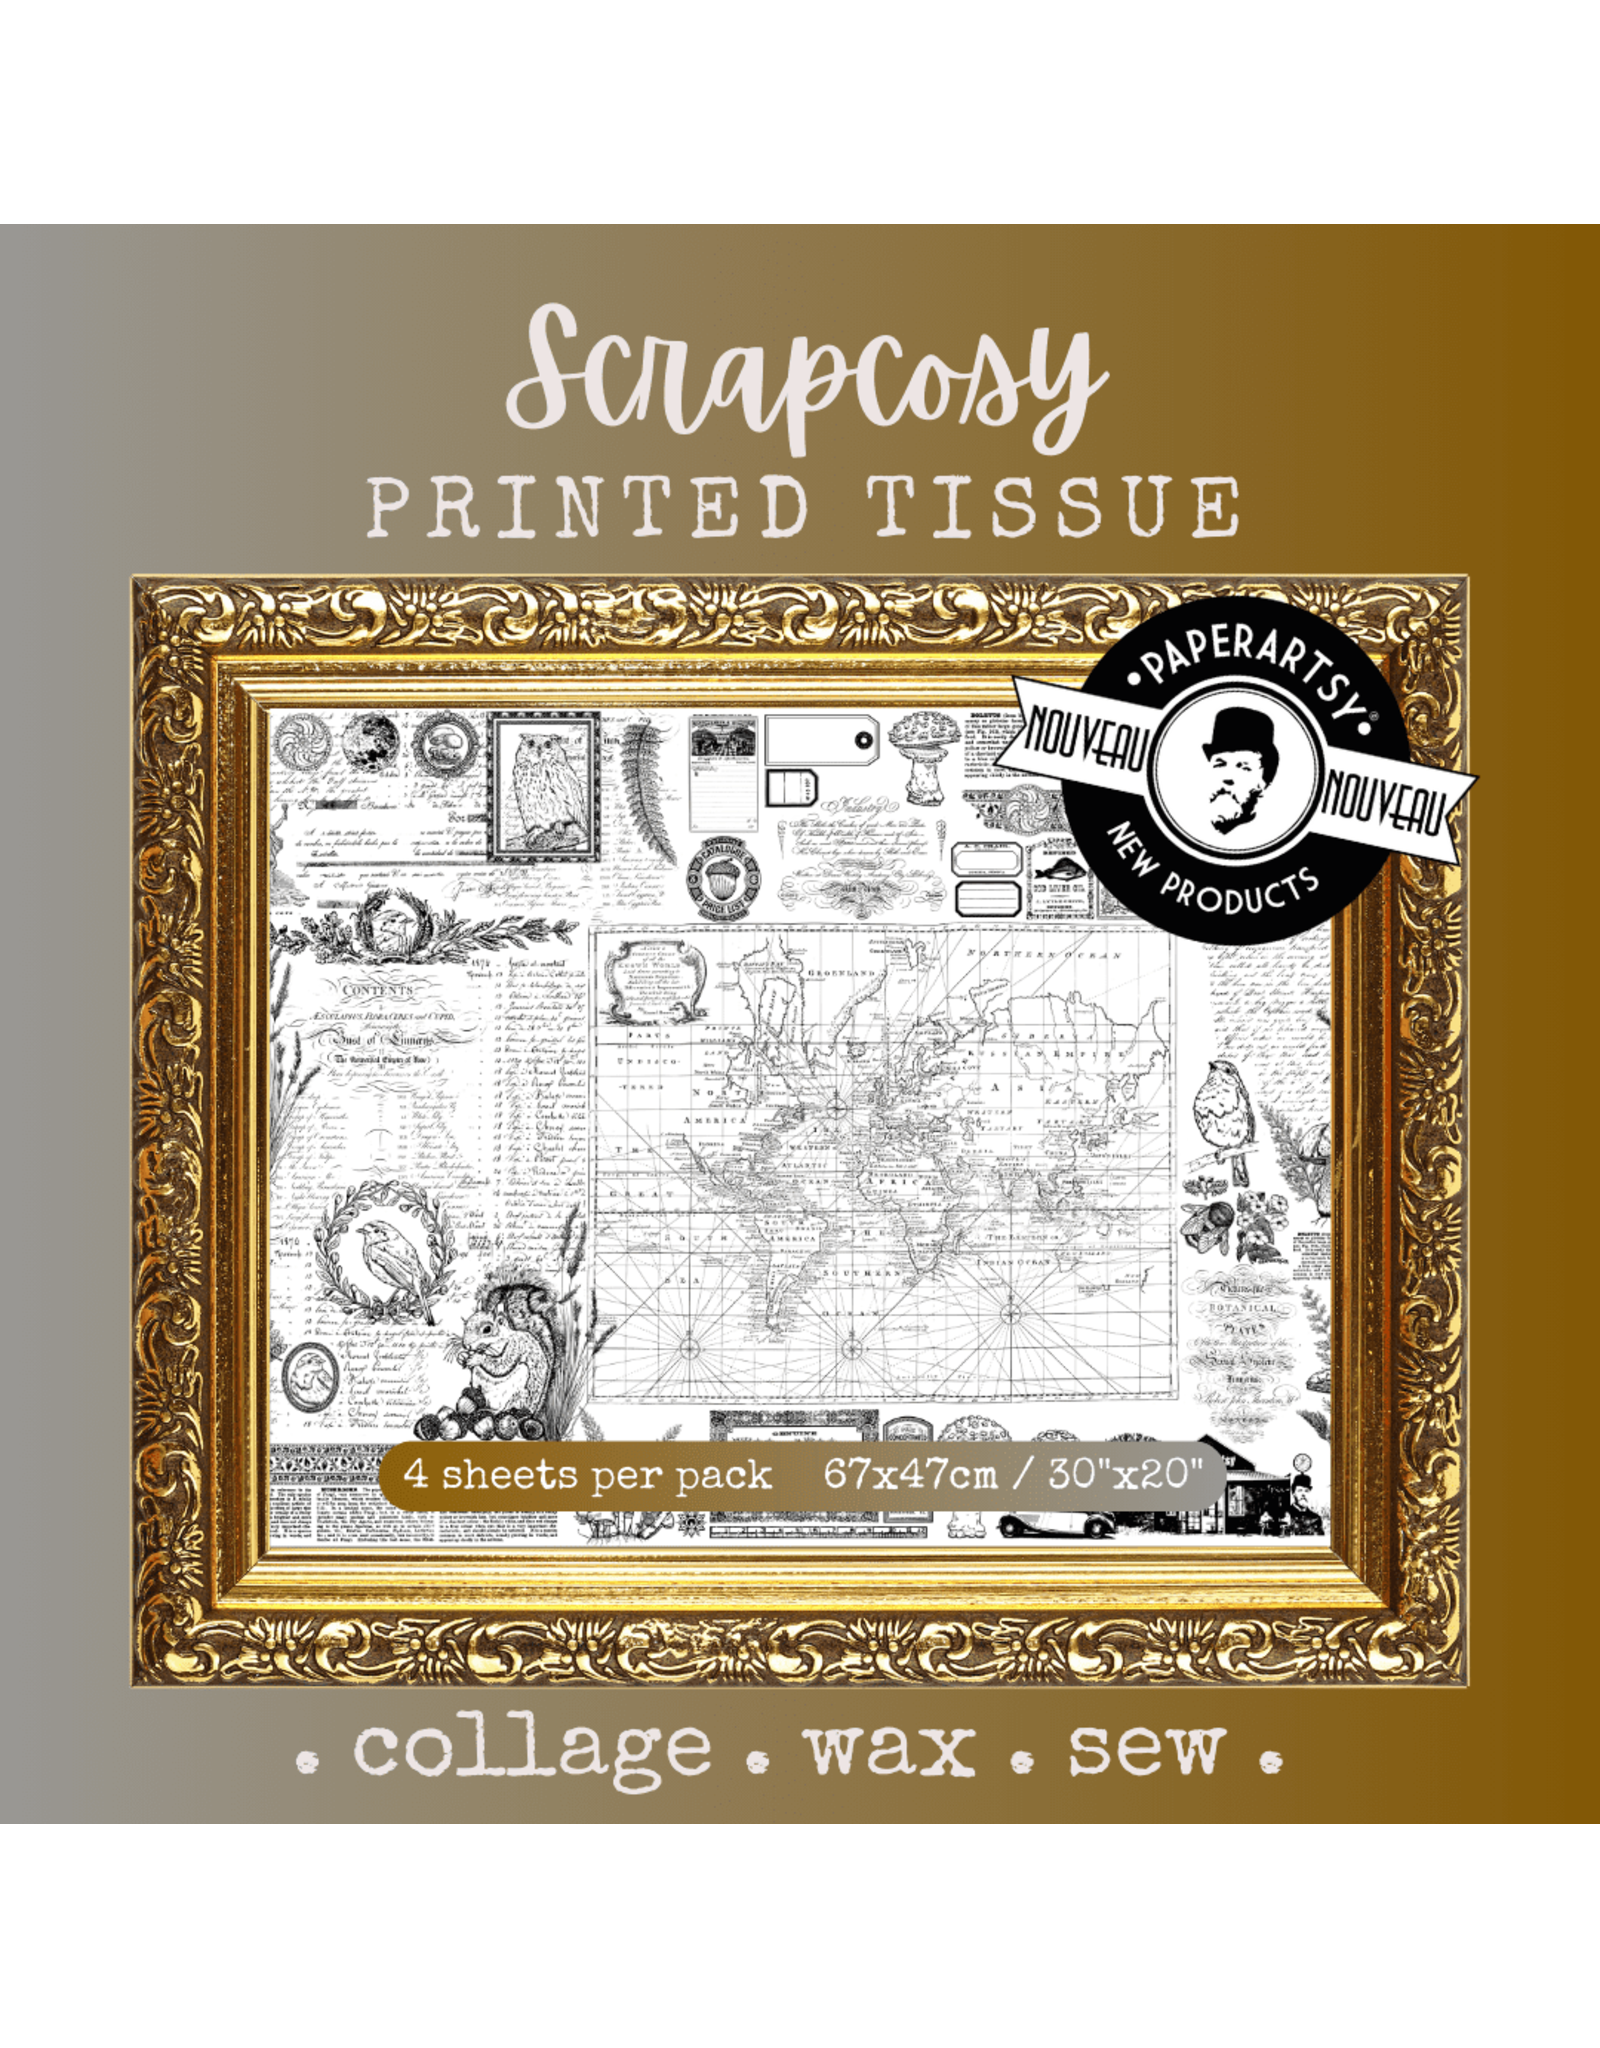 PAPER ARTSY PAPER ARTSY SCRAPCOSY PRINTED TISSUE COLLAGE PAPER 4 SHEETS